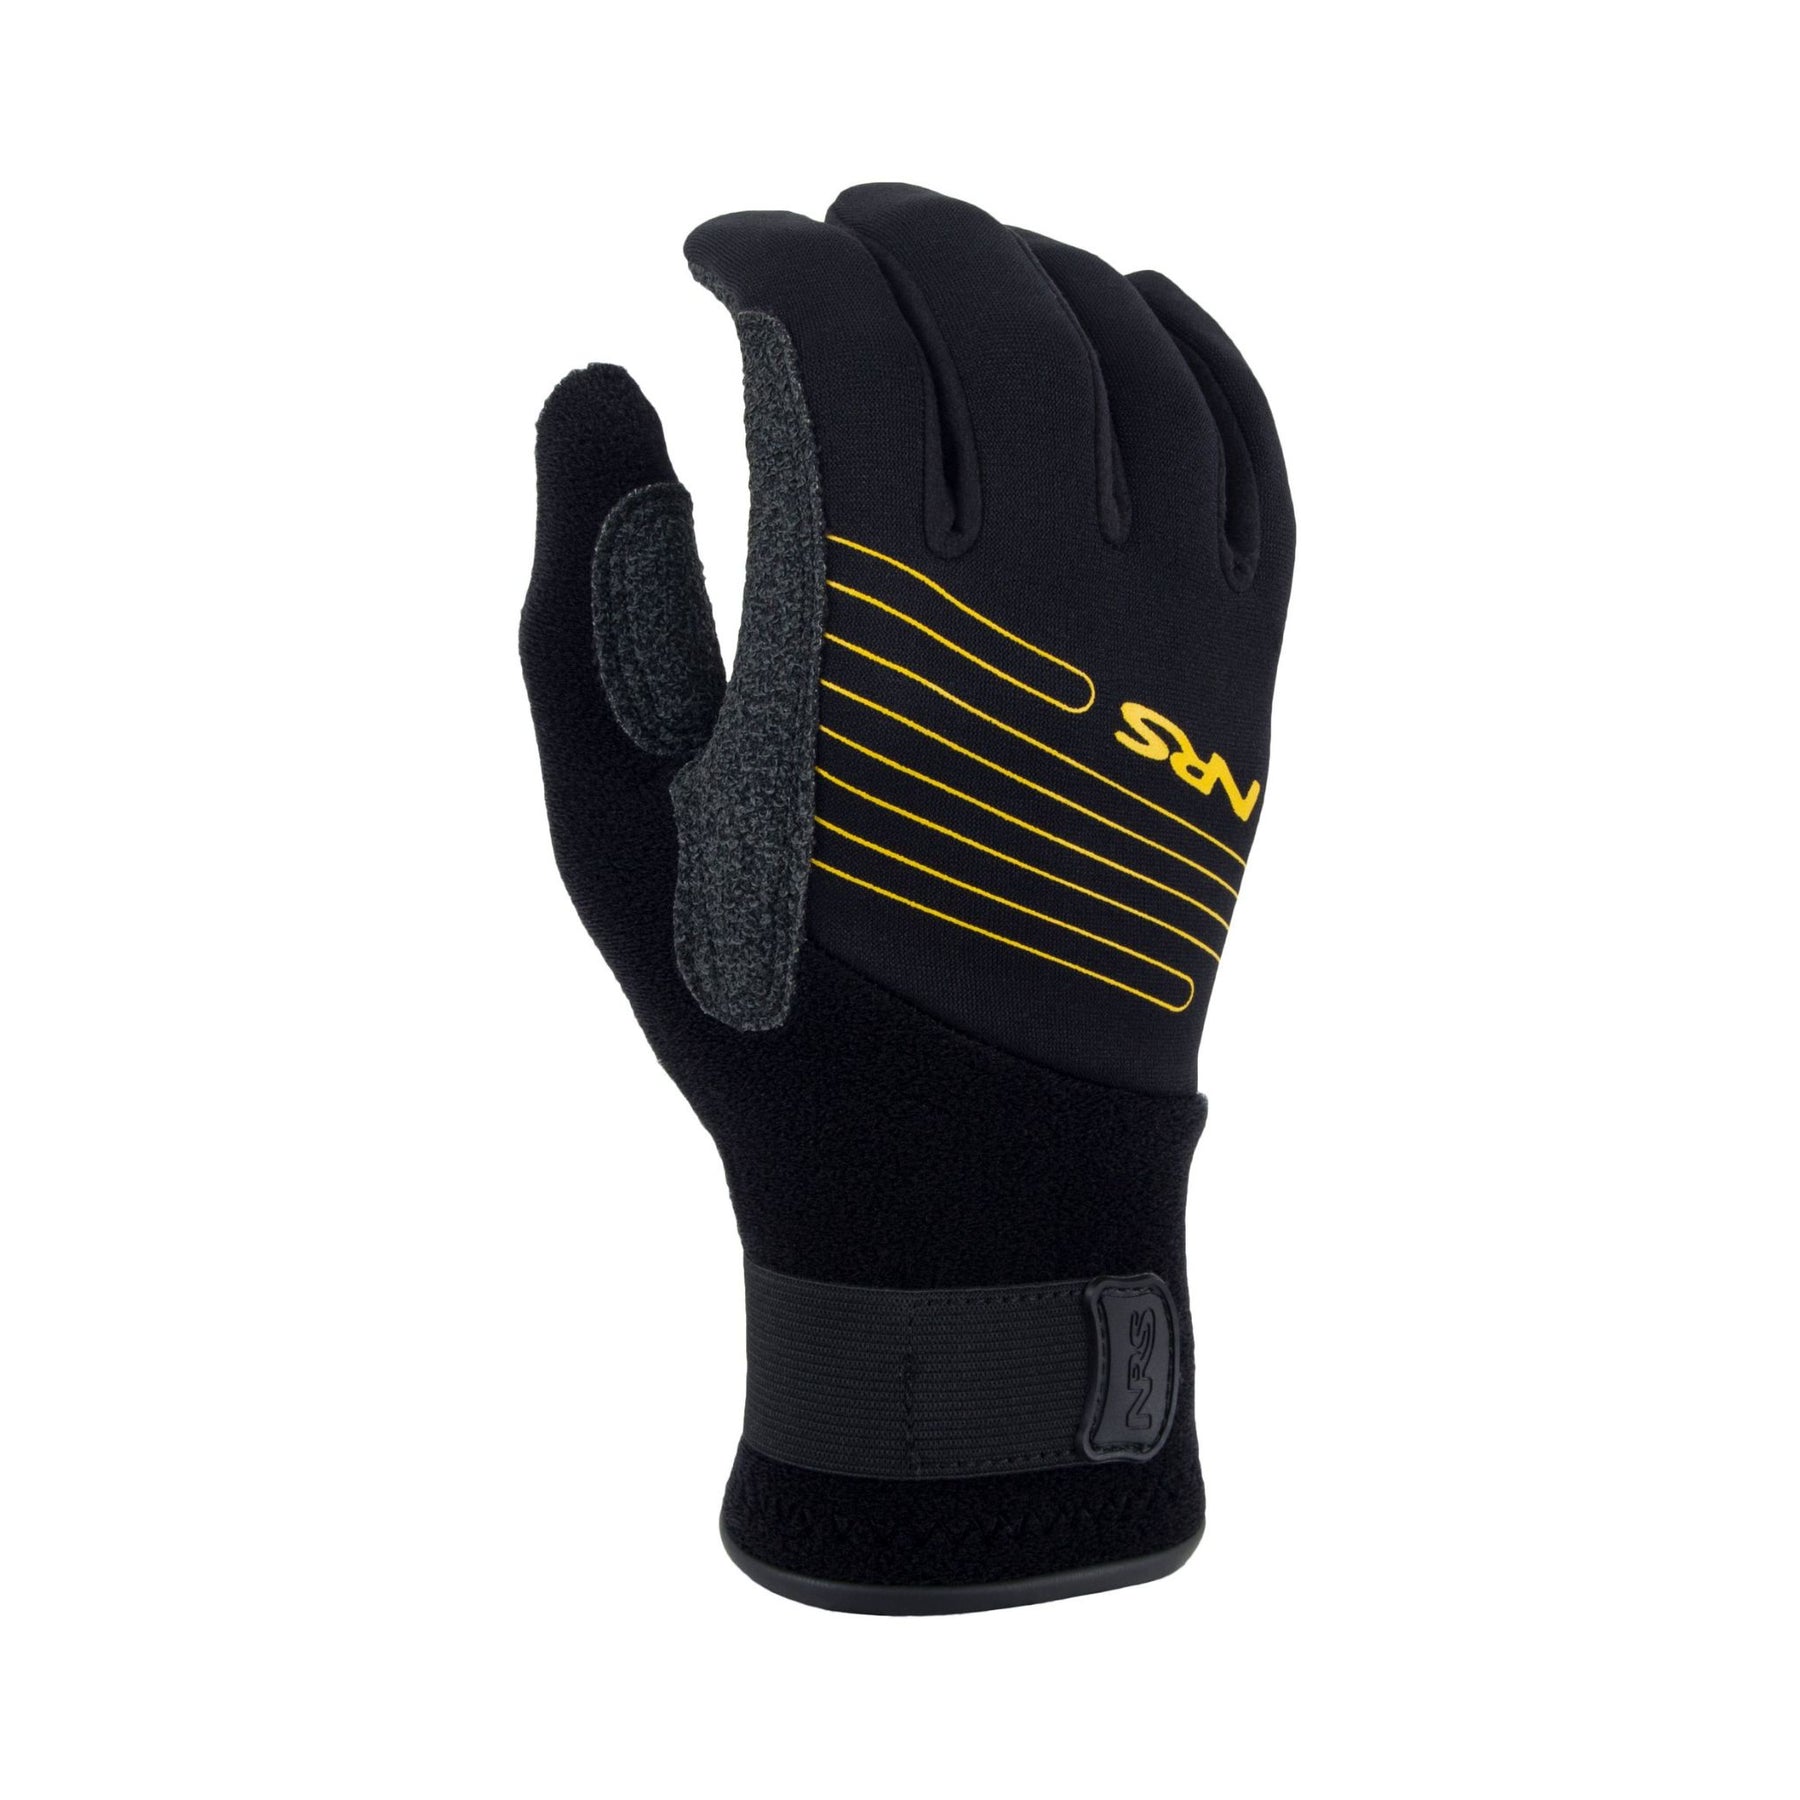 Rasdex Sun Glove Neoprene, Paddling Gloves